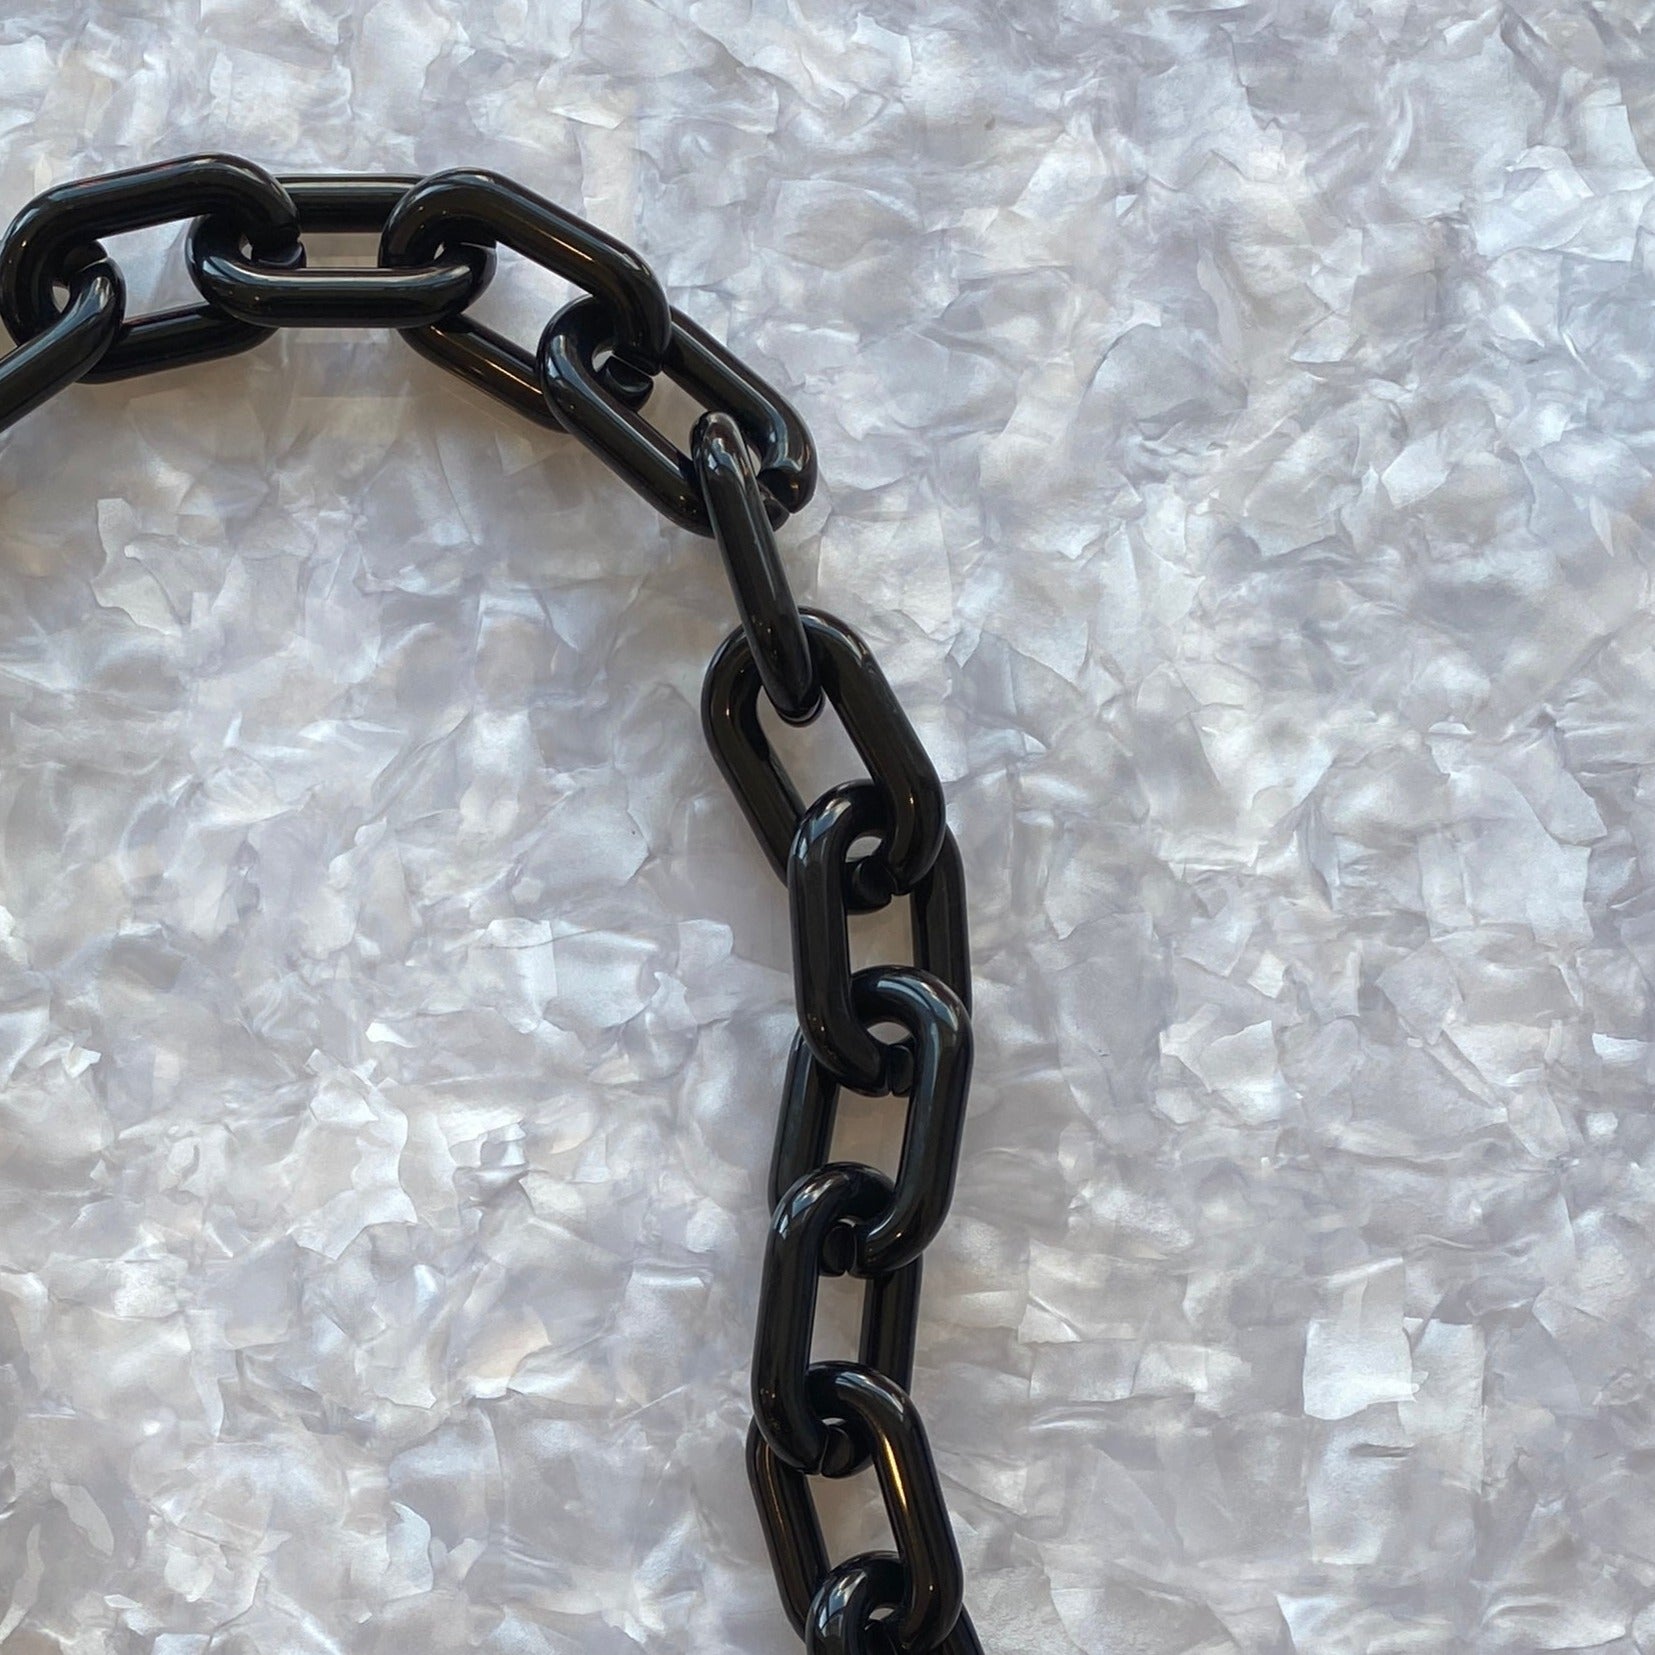 Chain Link Short Acrylic Purse Strap in Navy Blue – Closet Rehab